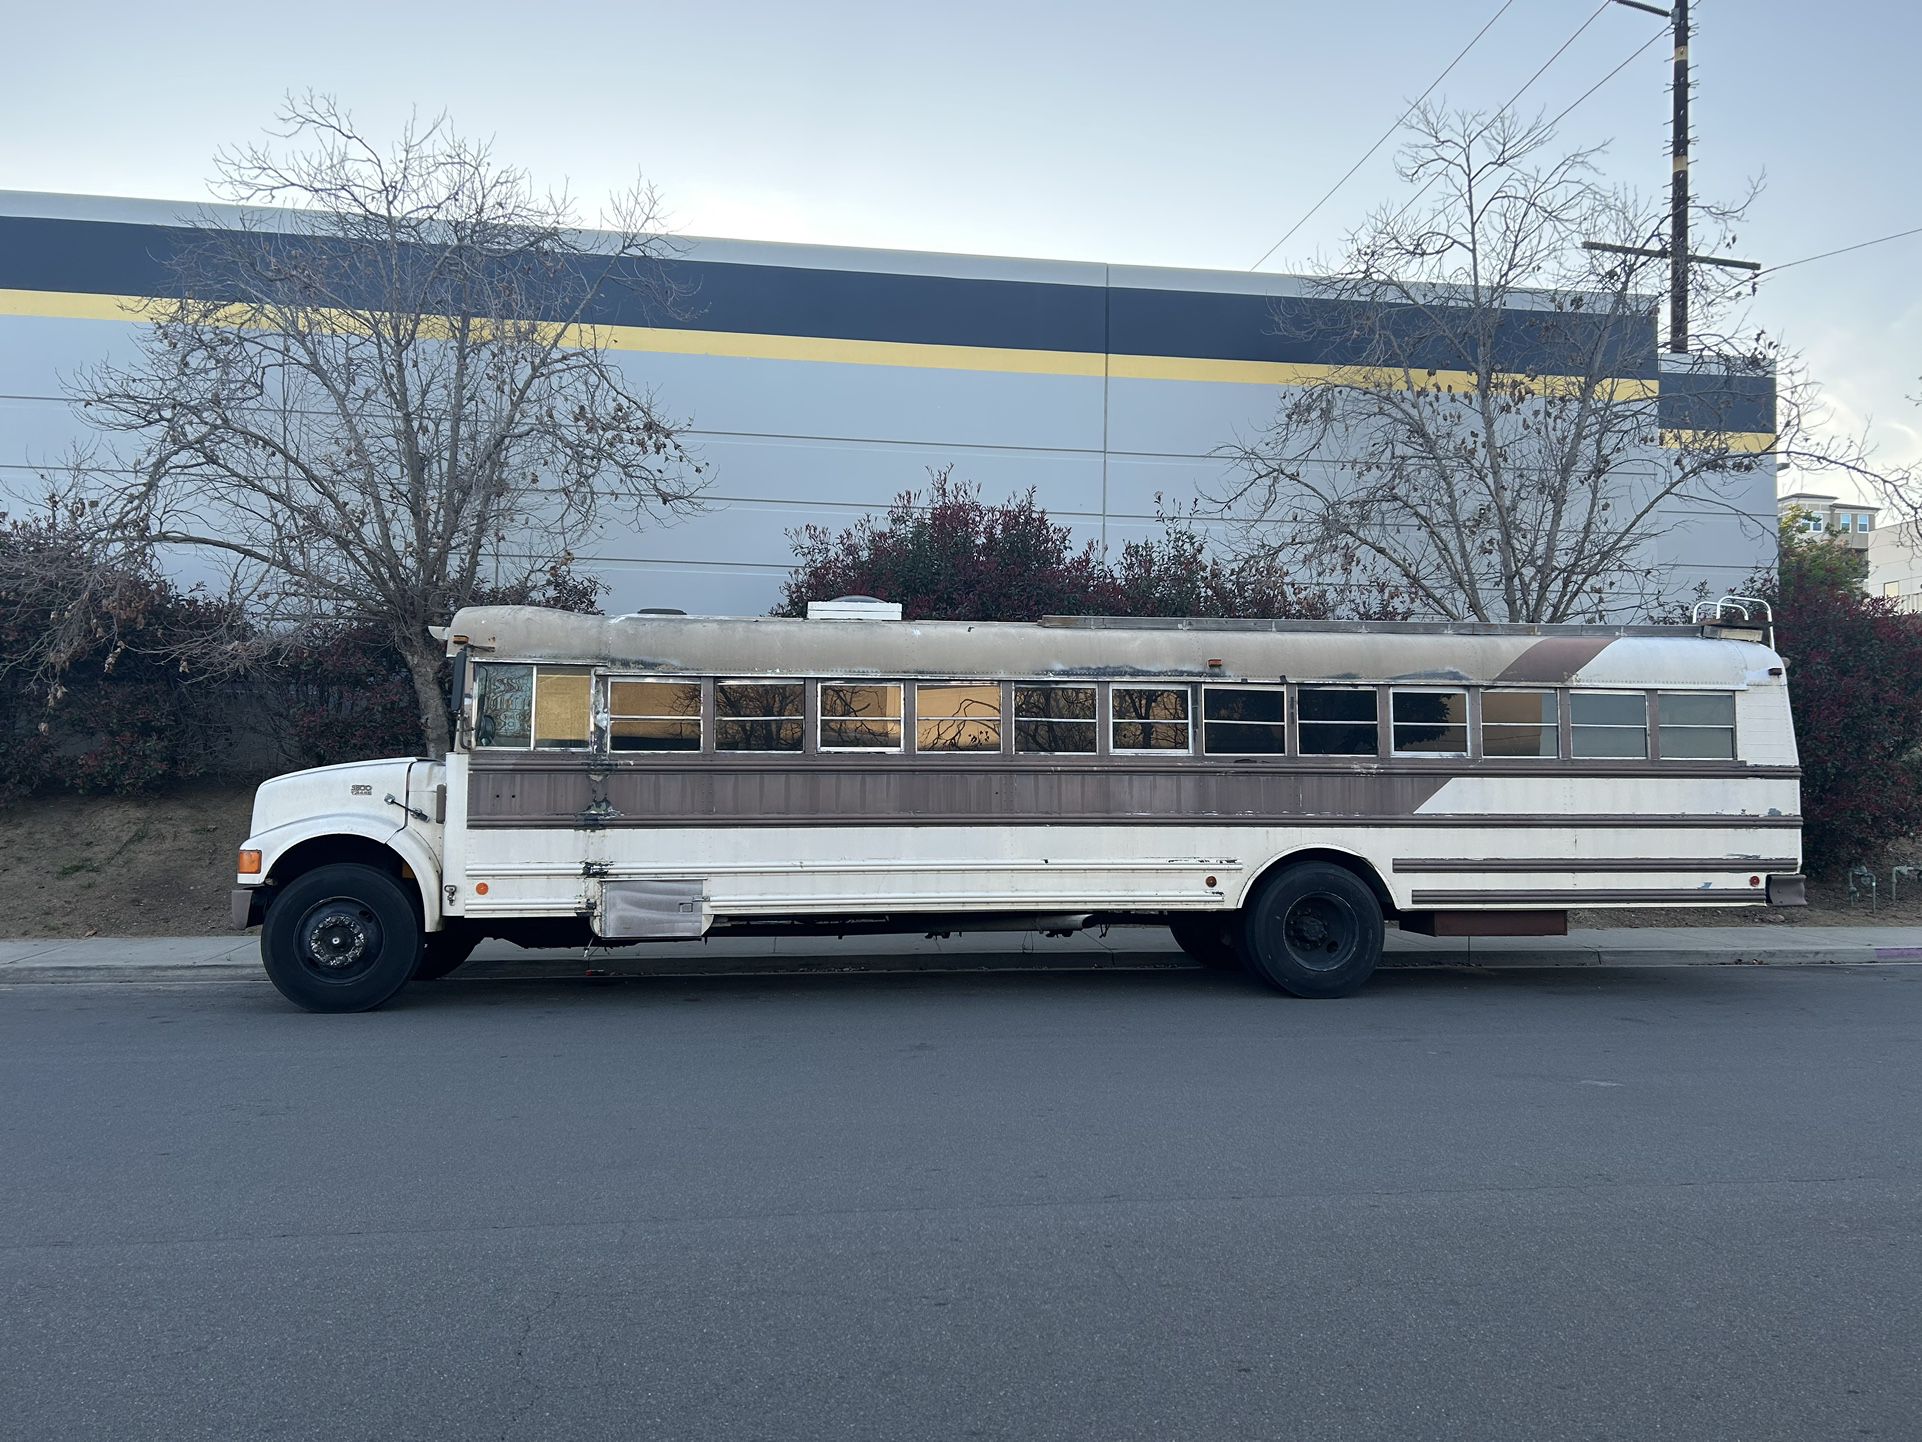 40 Ft Skoolie School Bus Tiny Home On Wheels